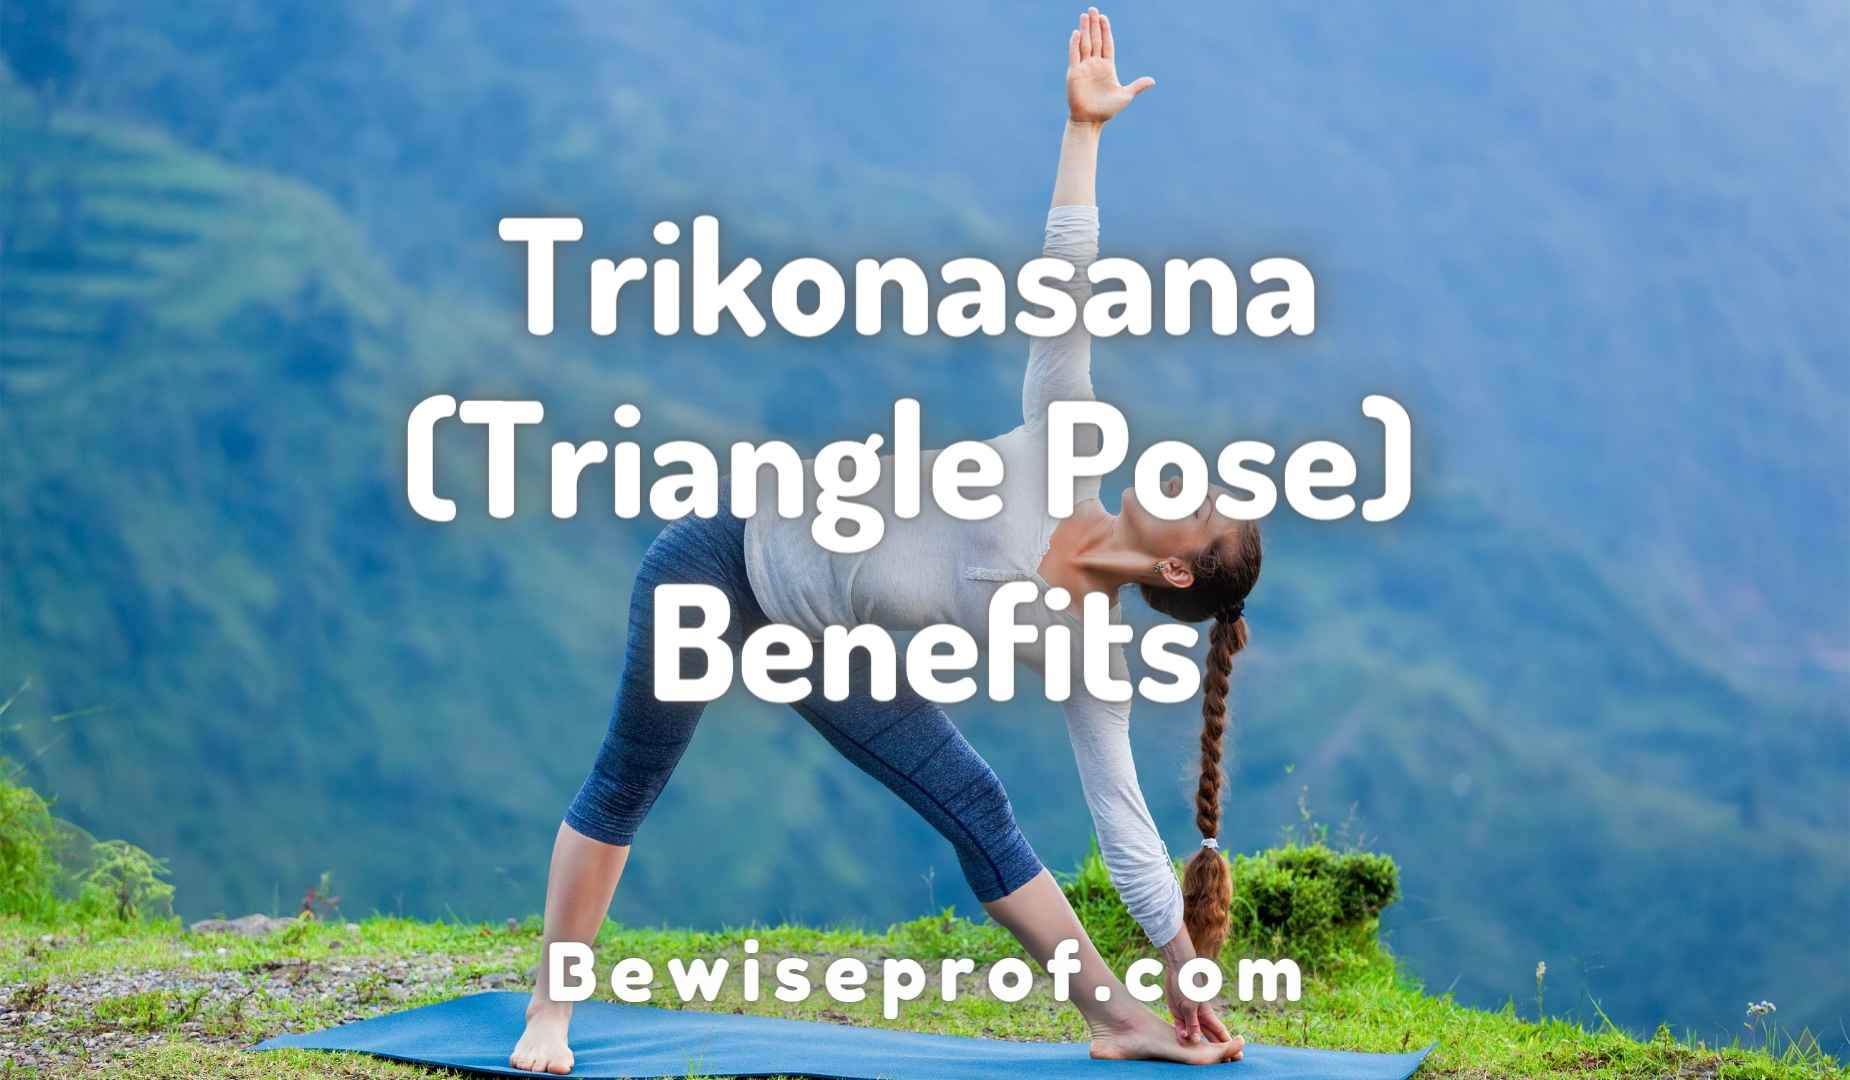 Trikonasana (Triangle Pose) Benefits